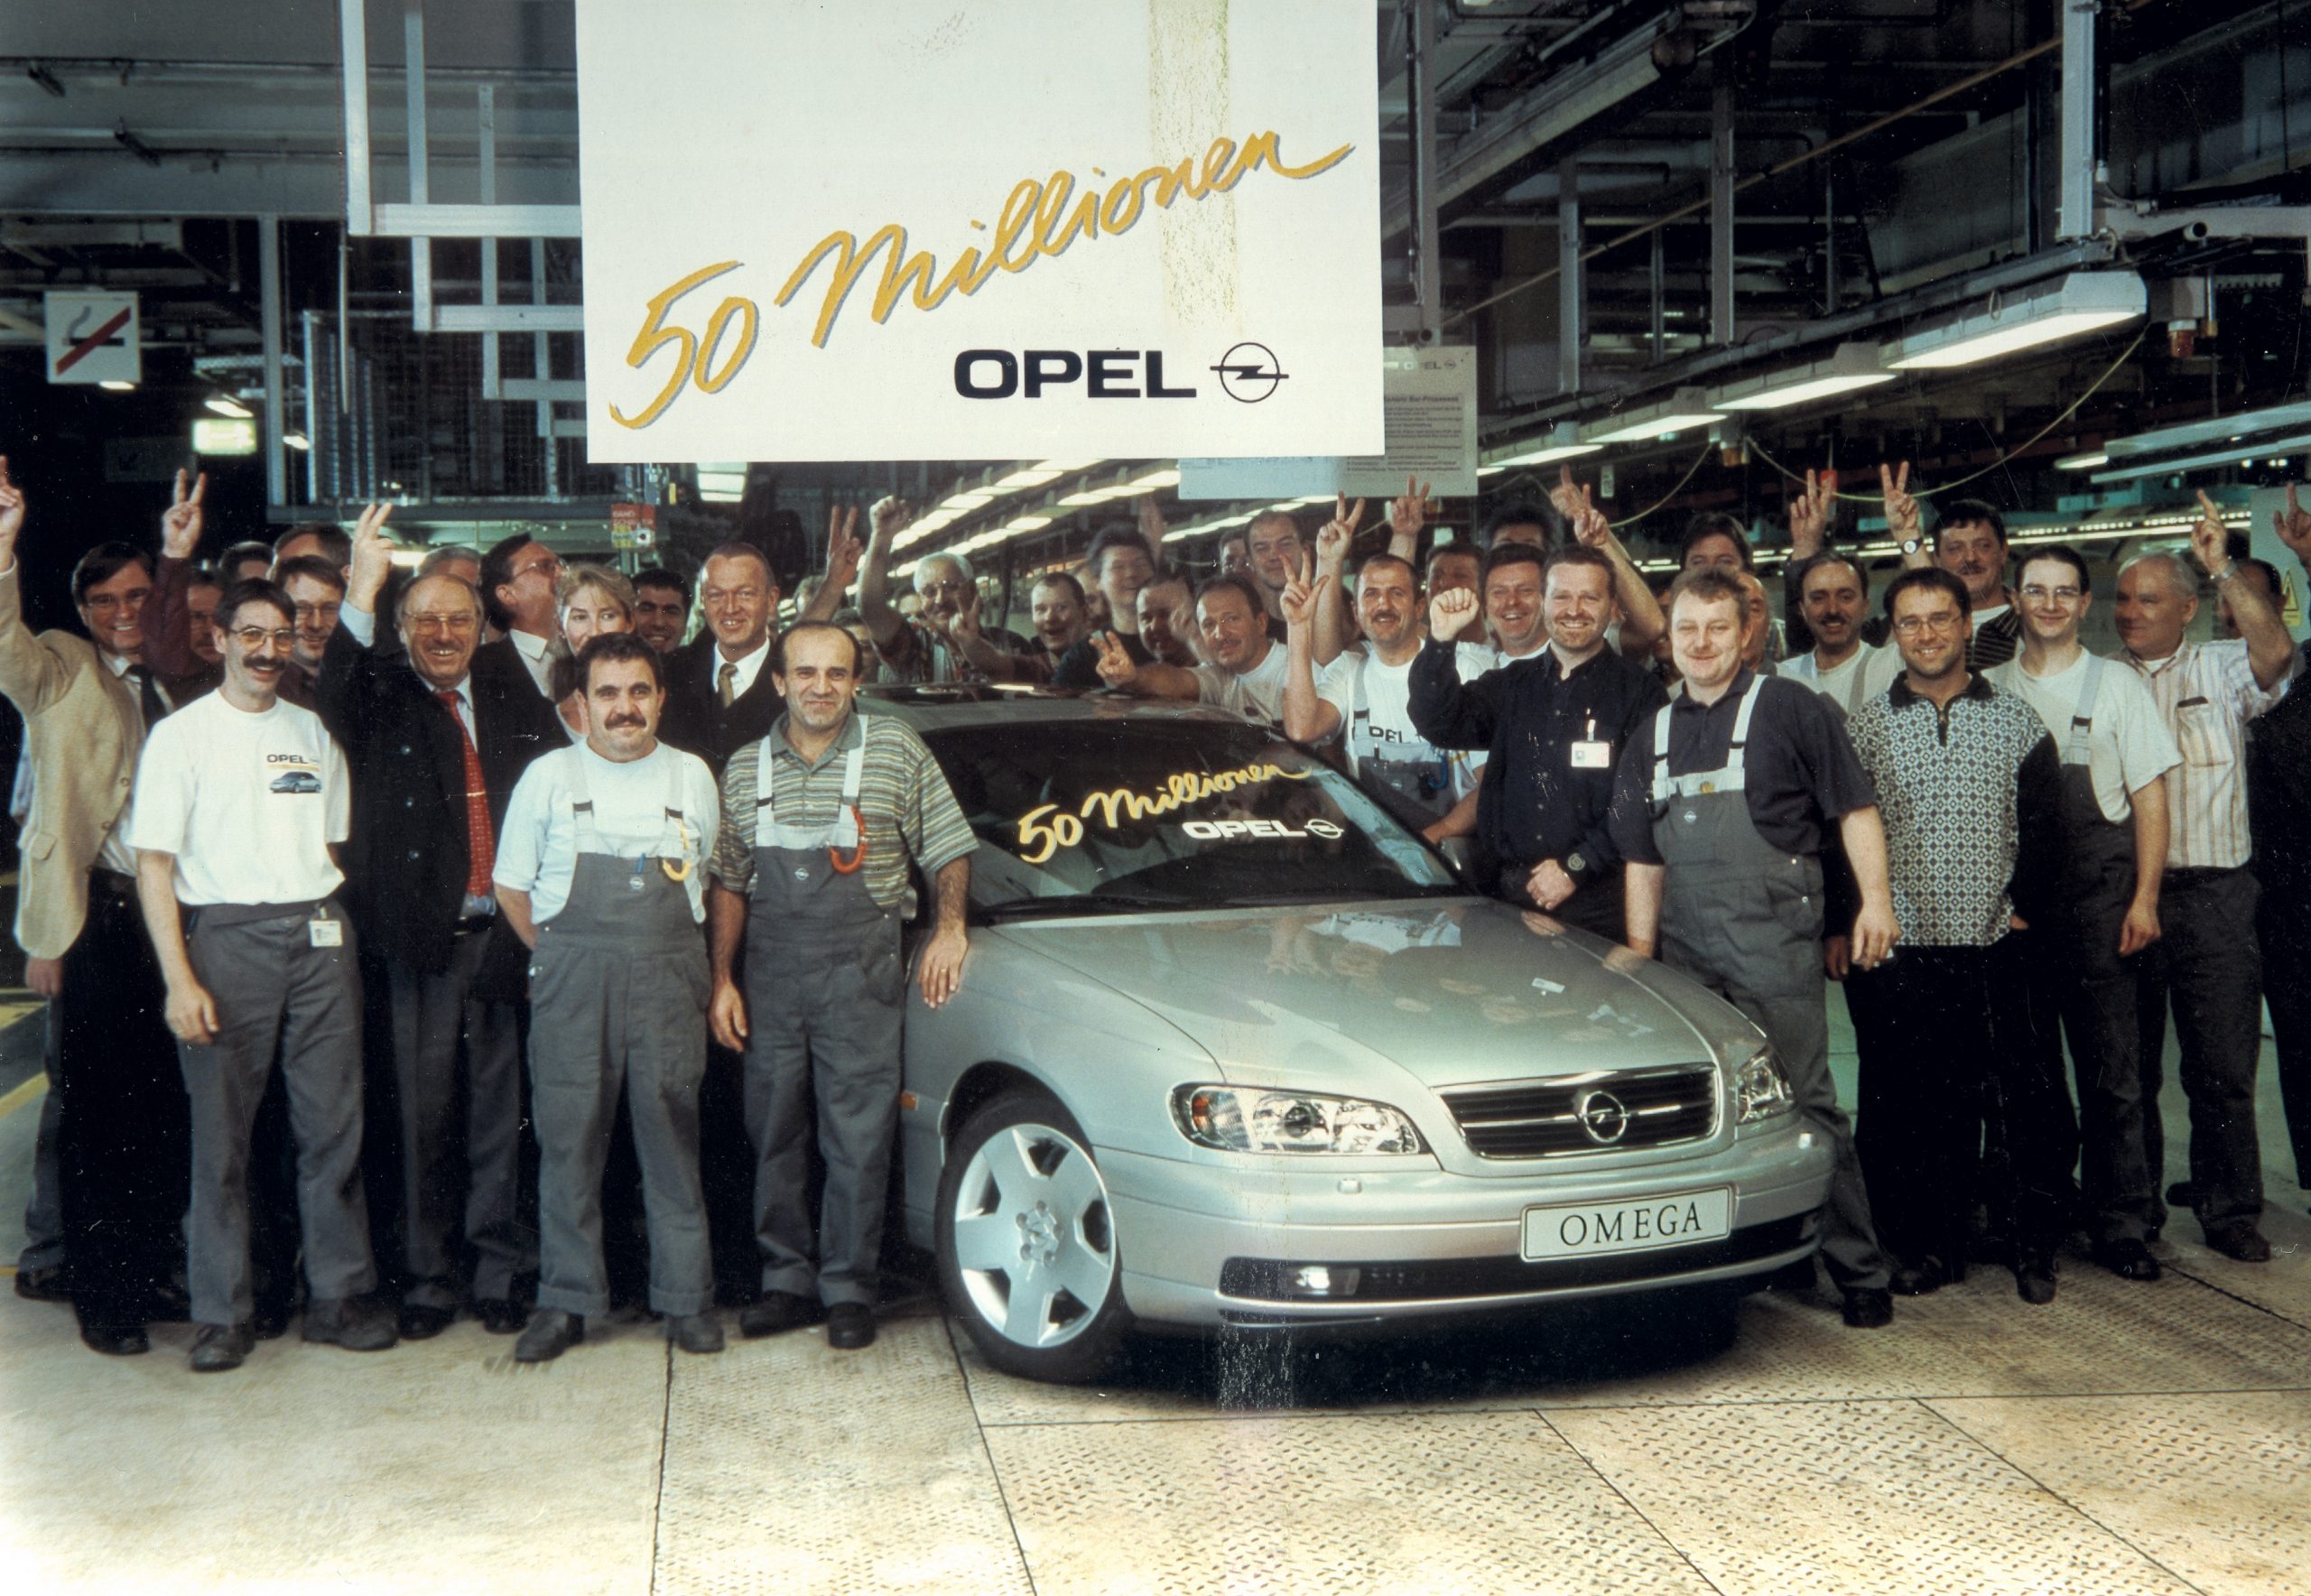 Papamobile a idrogeno - image 1999-50-milioni-Opel-scaled on https://motori.net